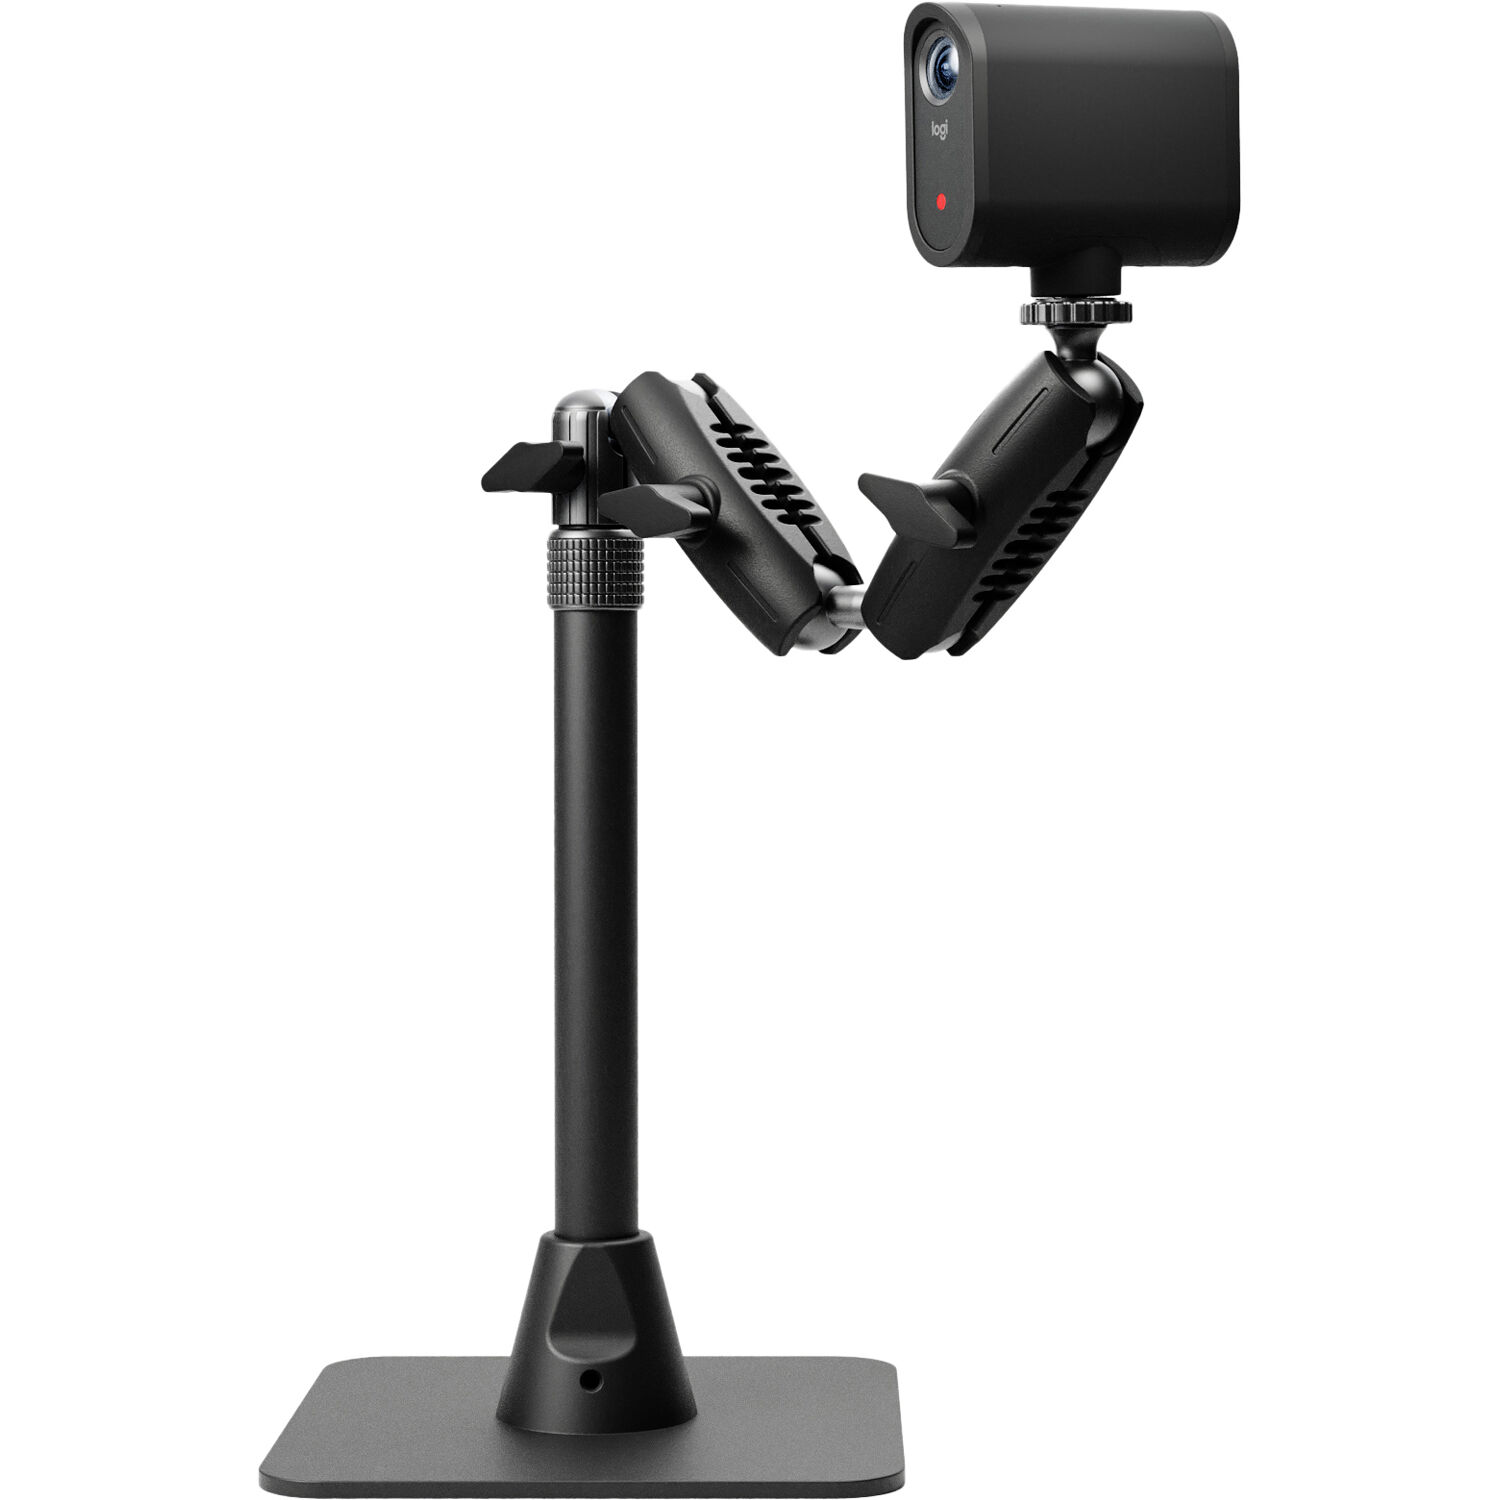 Mevo Start Live Streaming Camera and Camera Stand